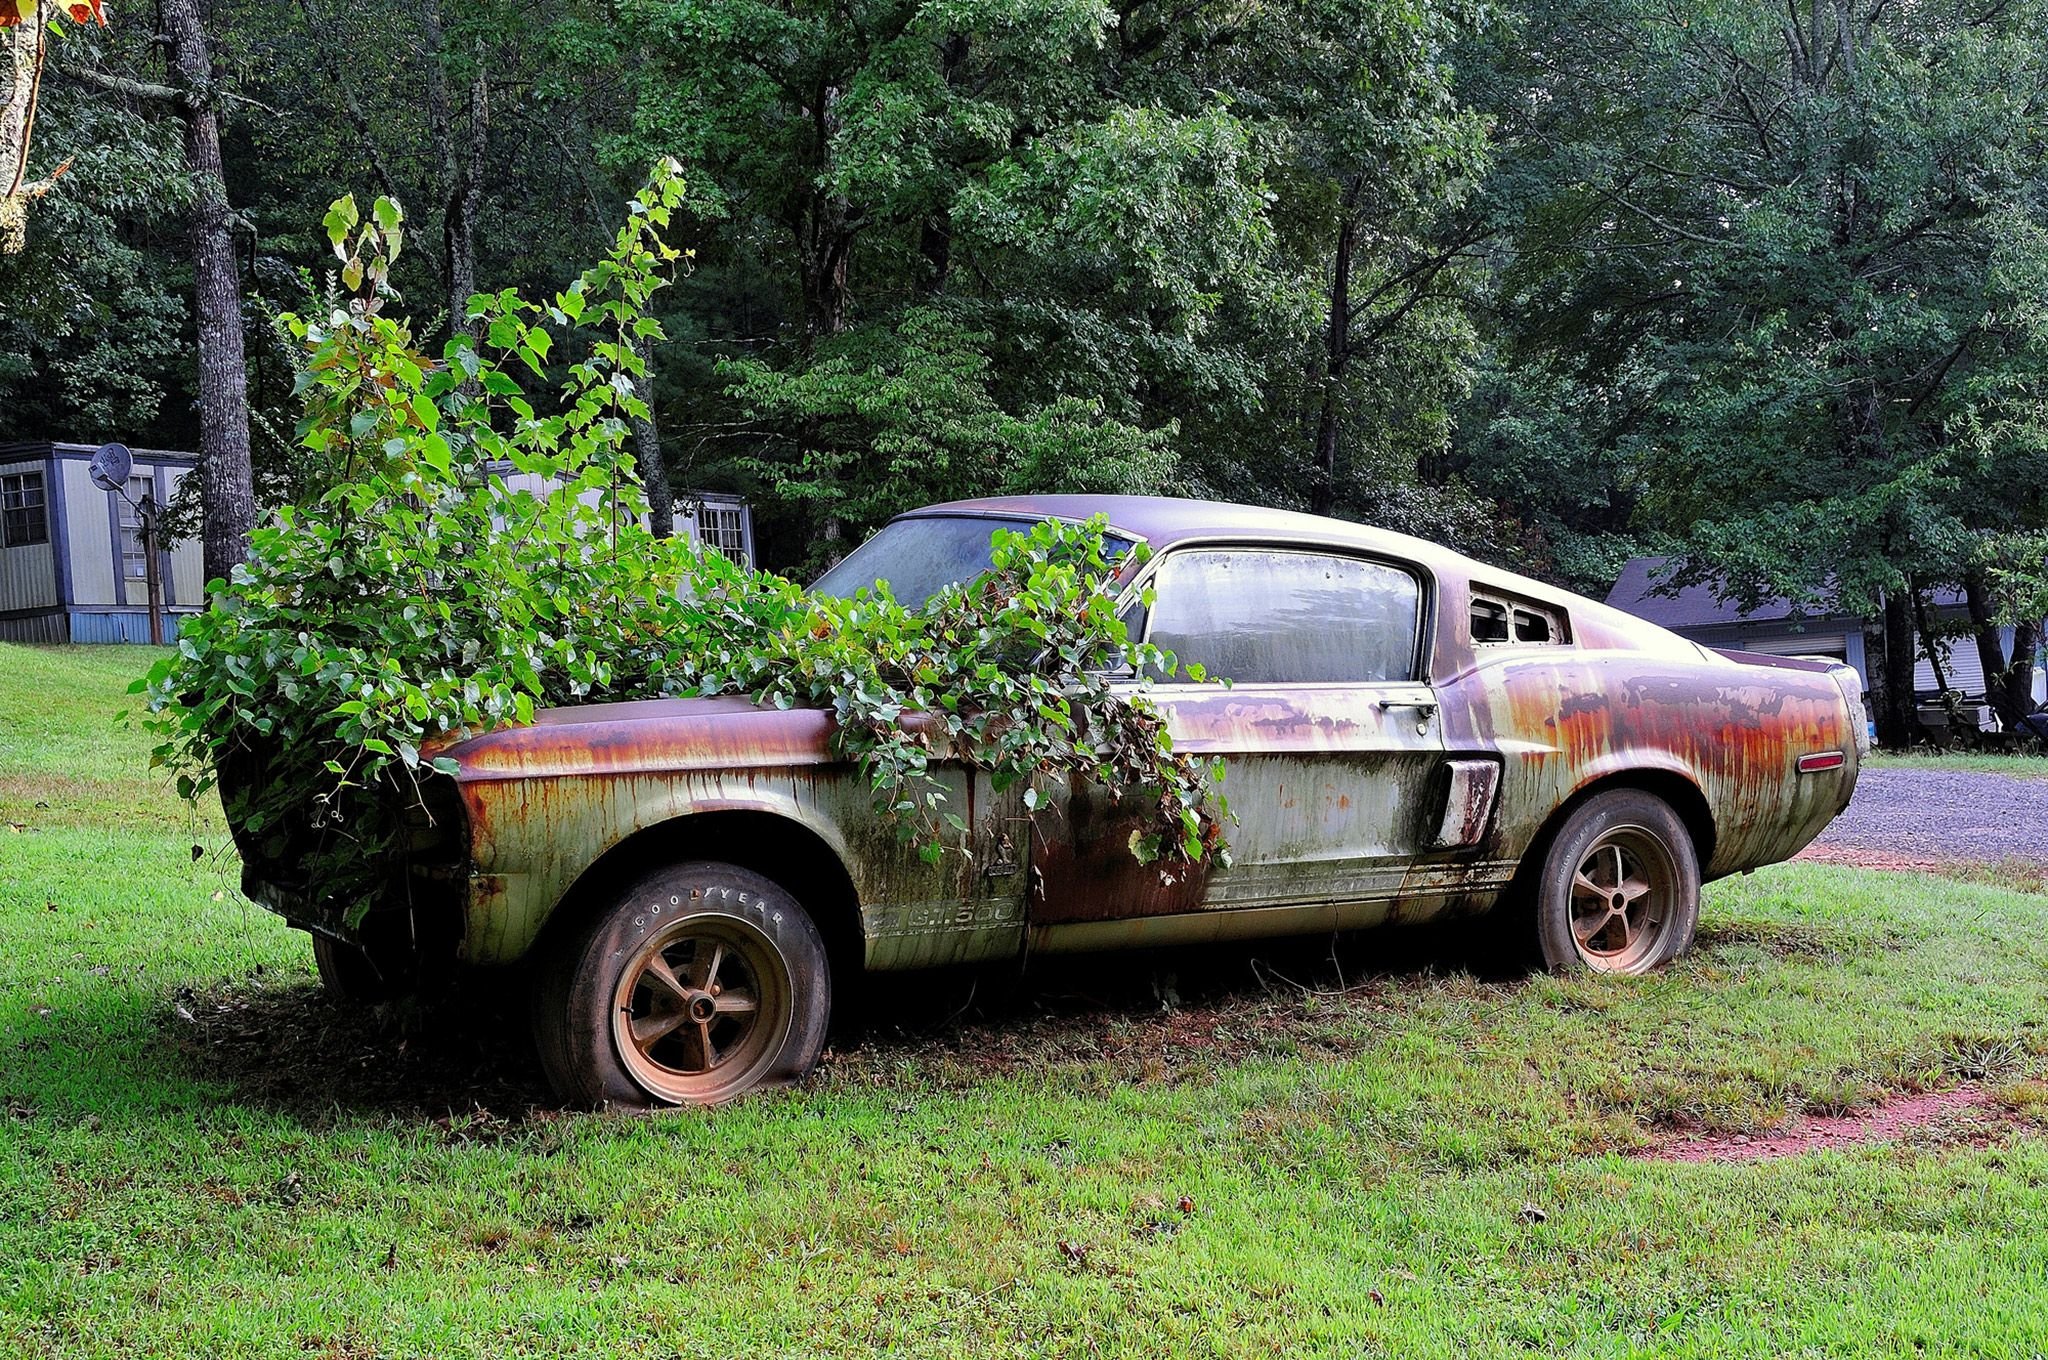 Rust on the car фото 85